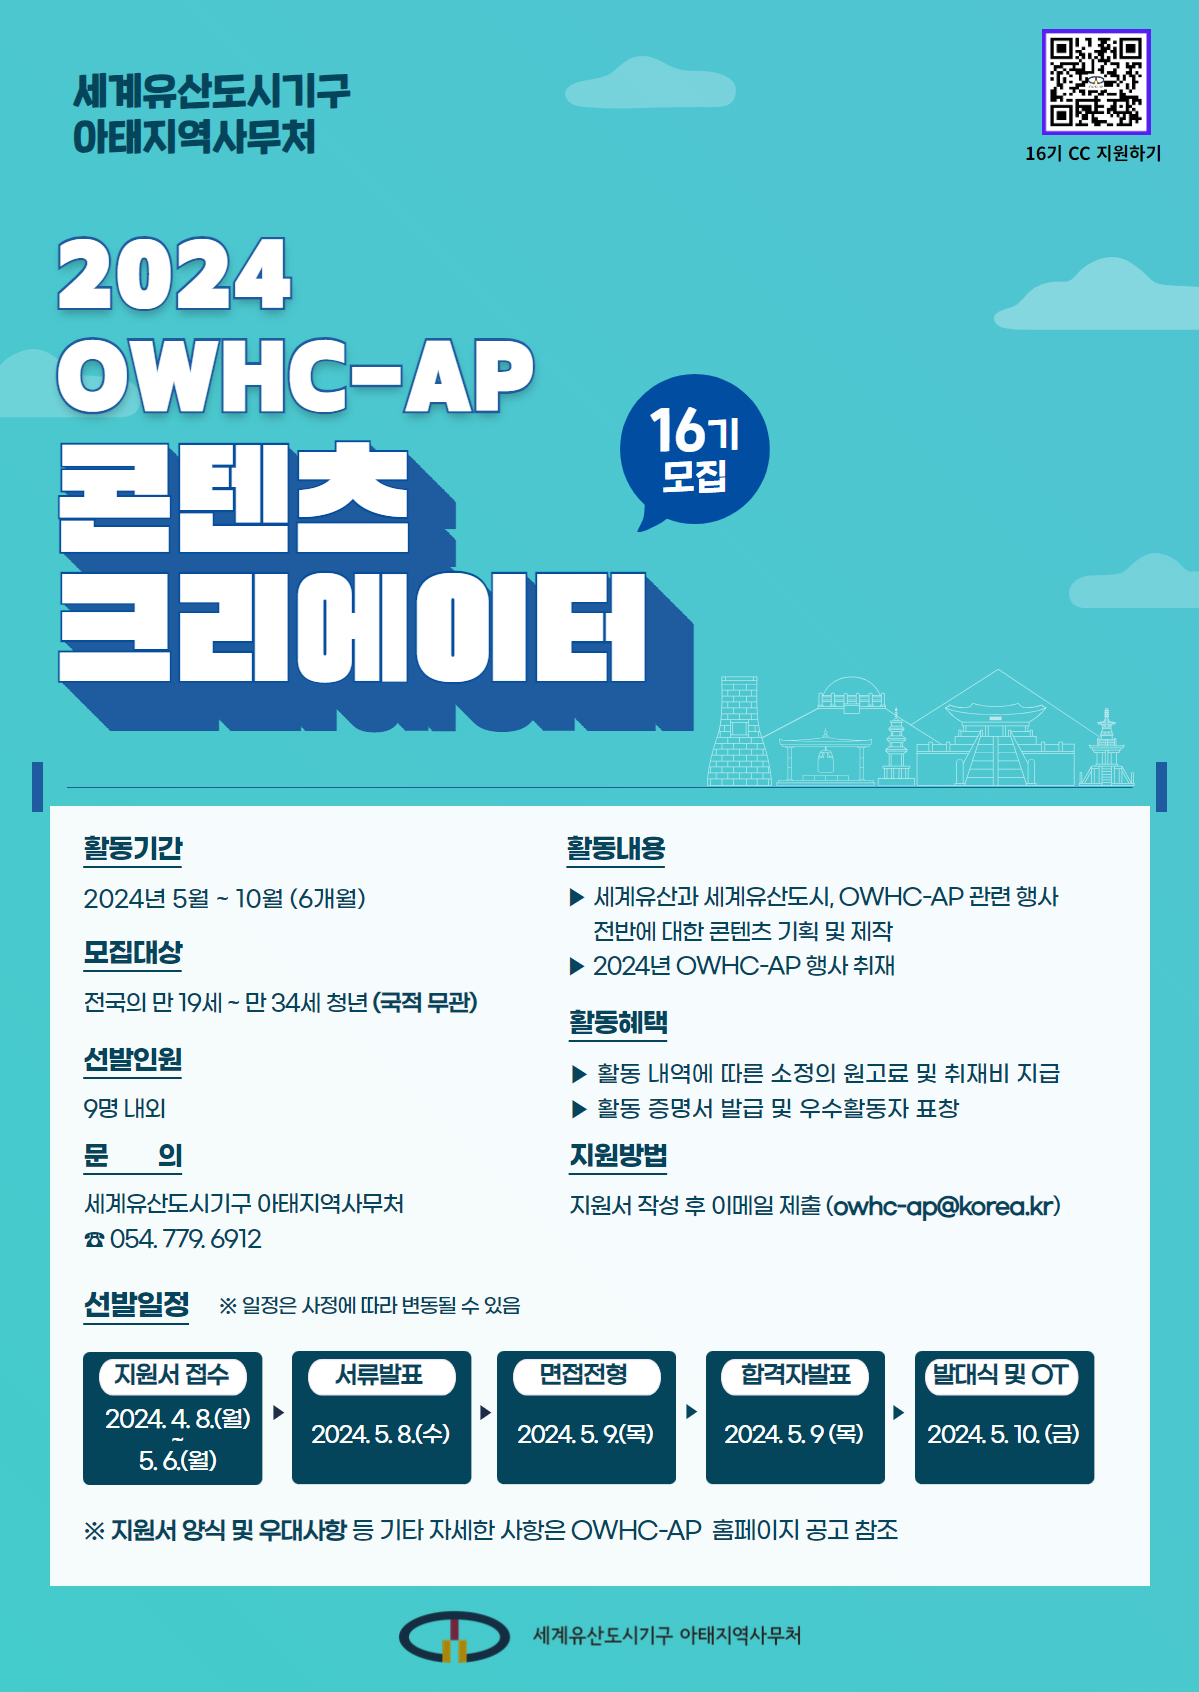 OWHC-AP